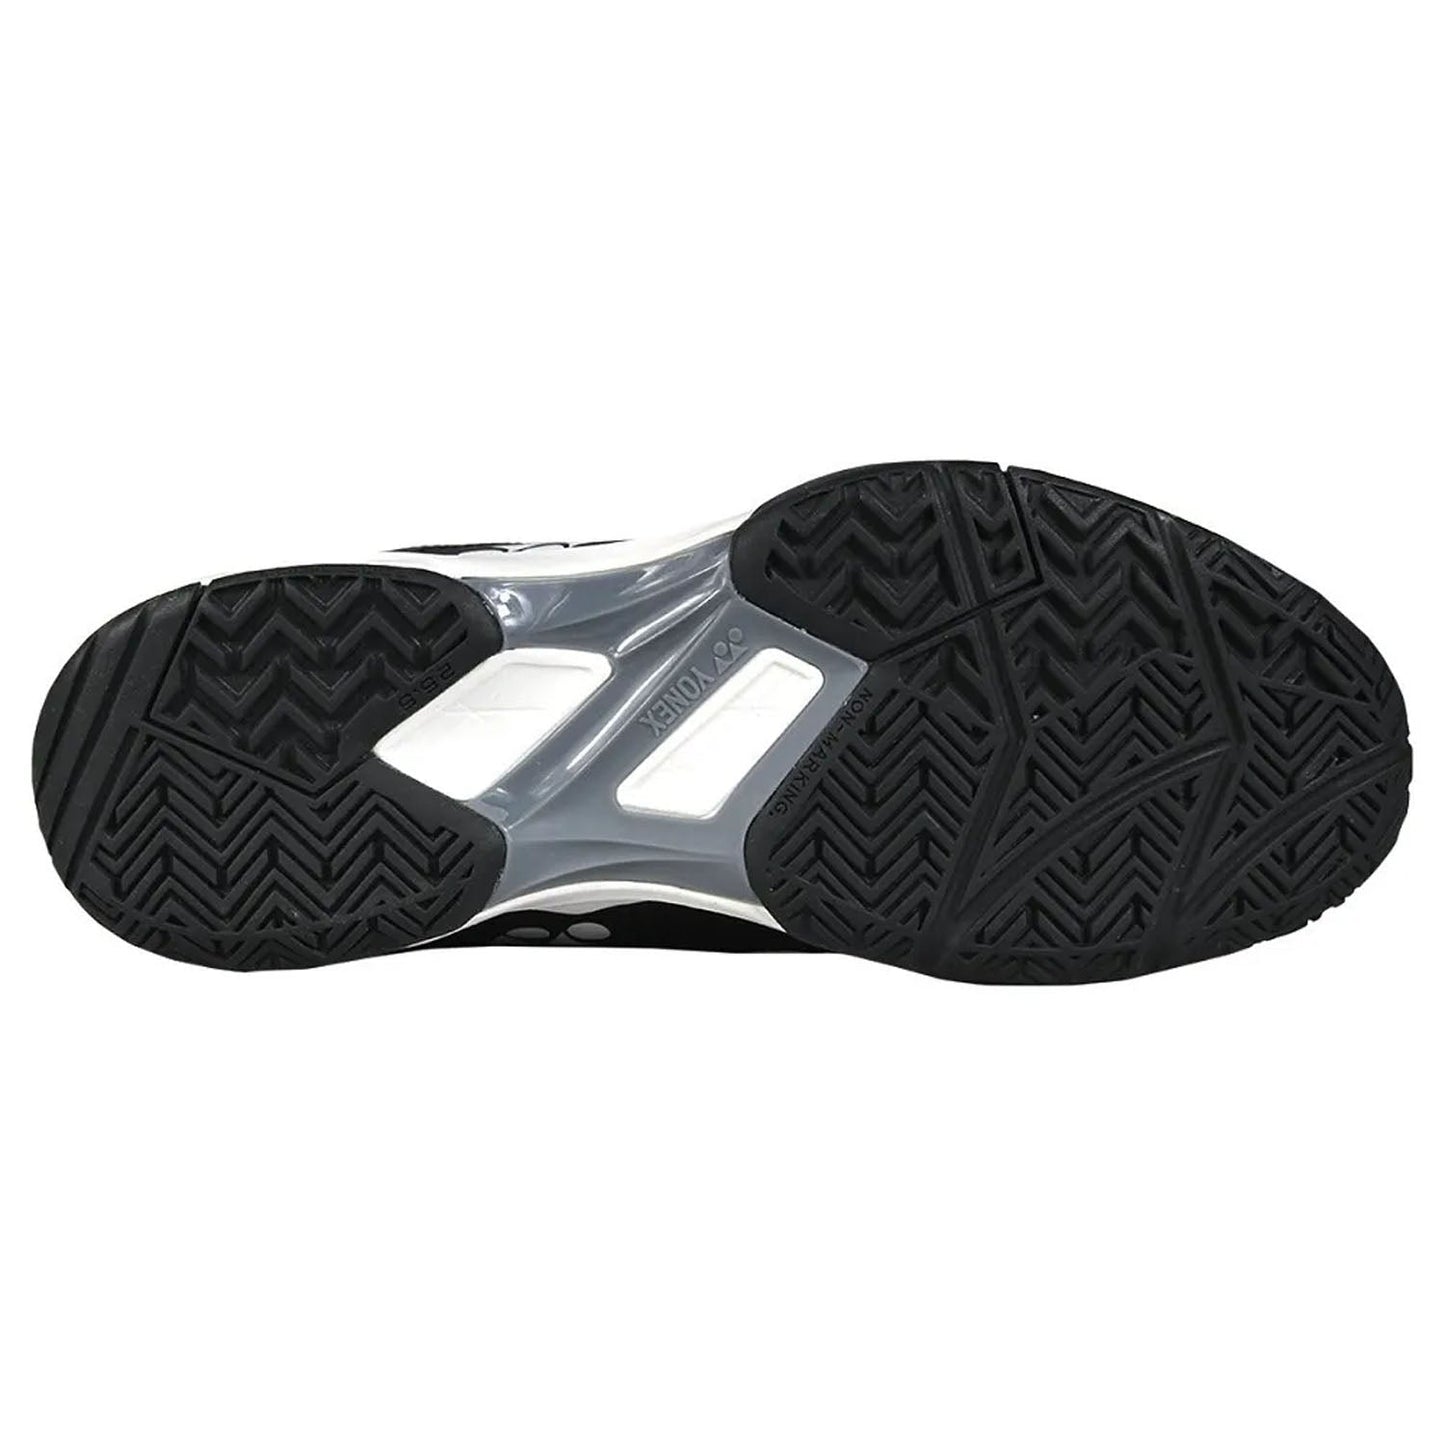 Yonex Lumio 3 Power Cushion Tennis Shoes - Best Price online Prokicksports.com